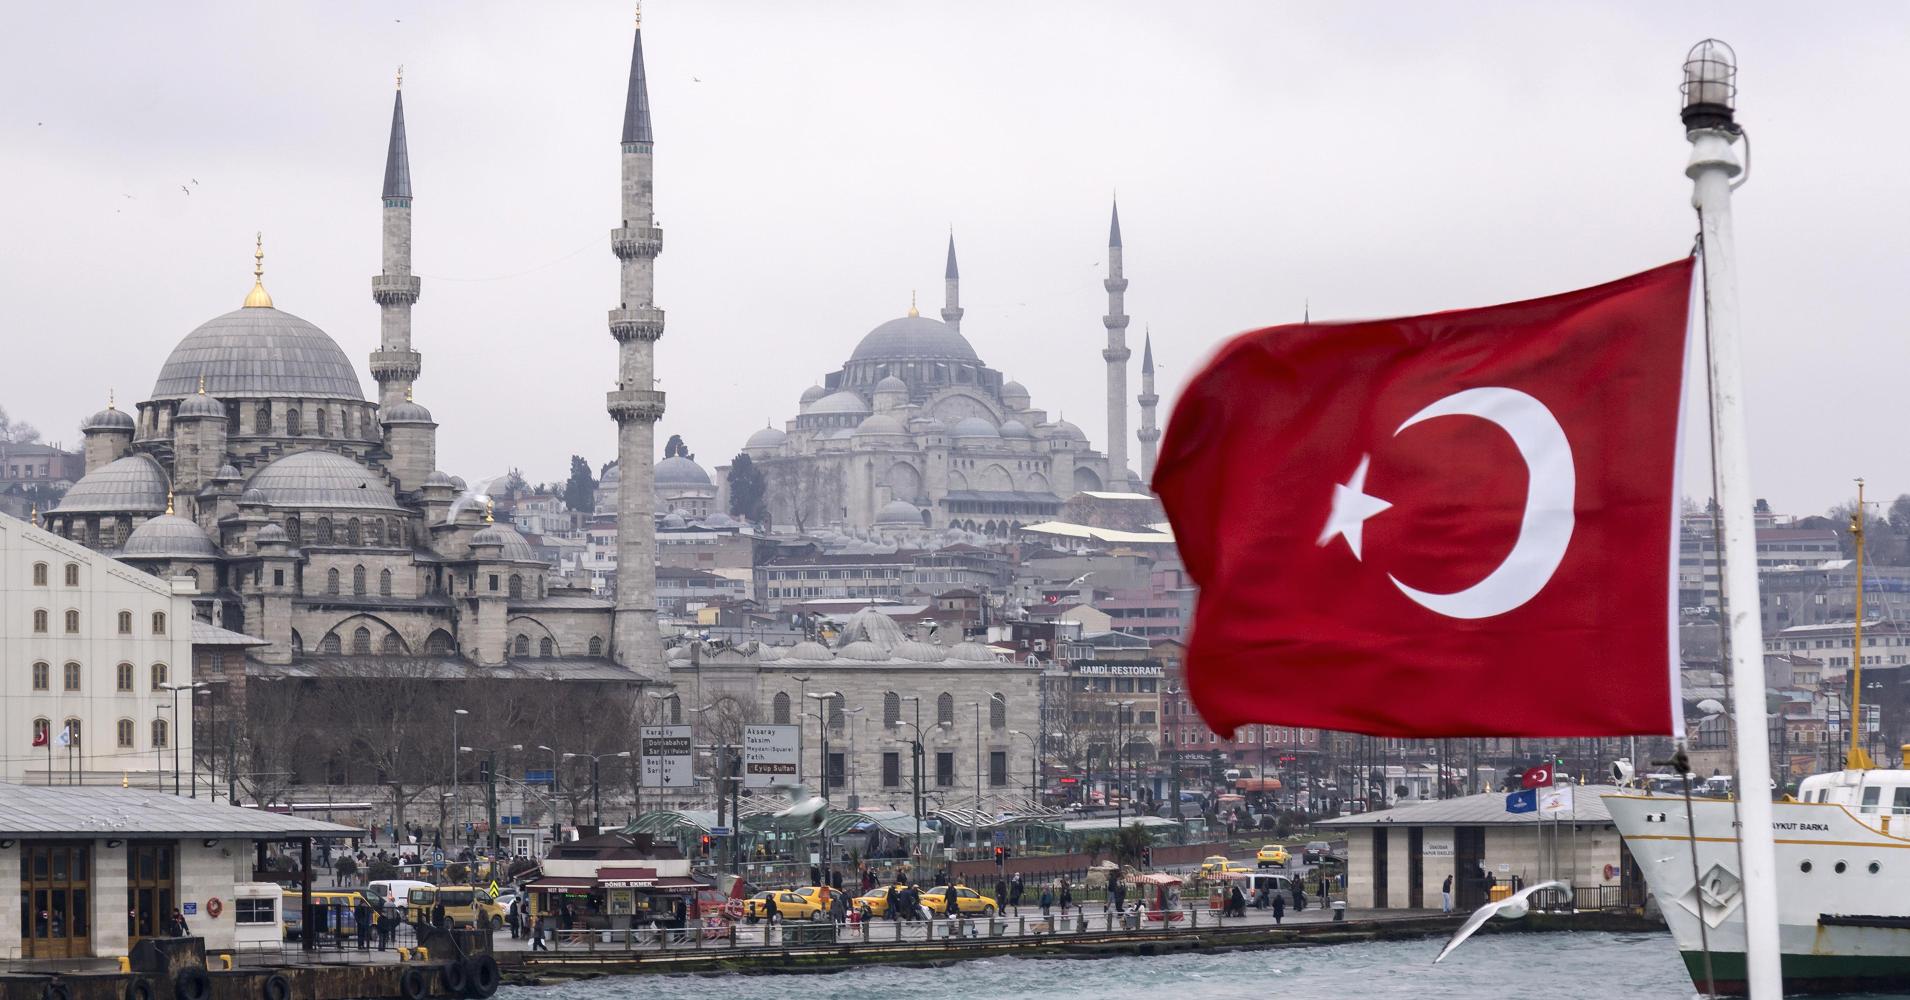 How to Establish a Company in Turkey